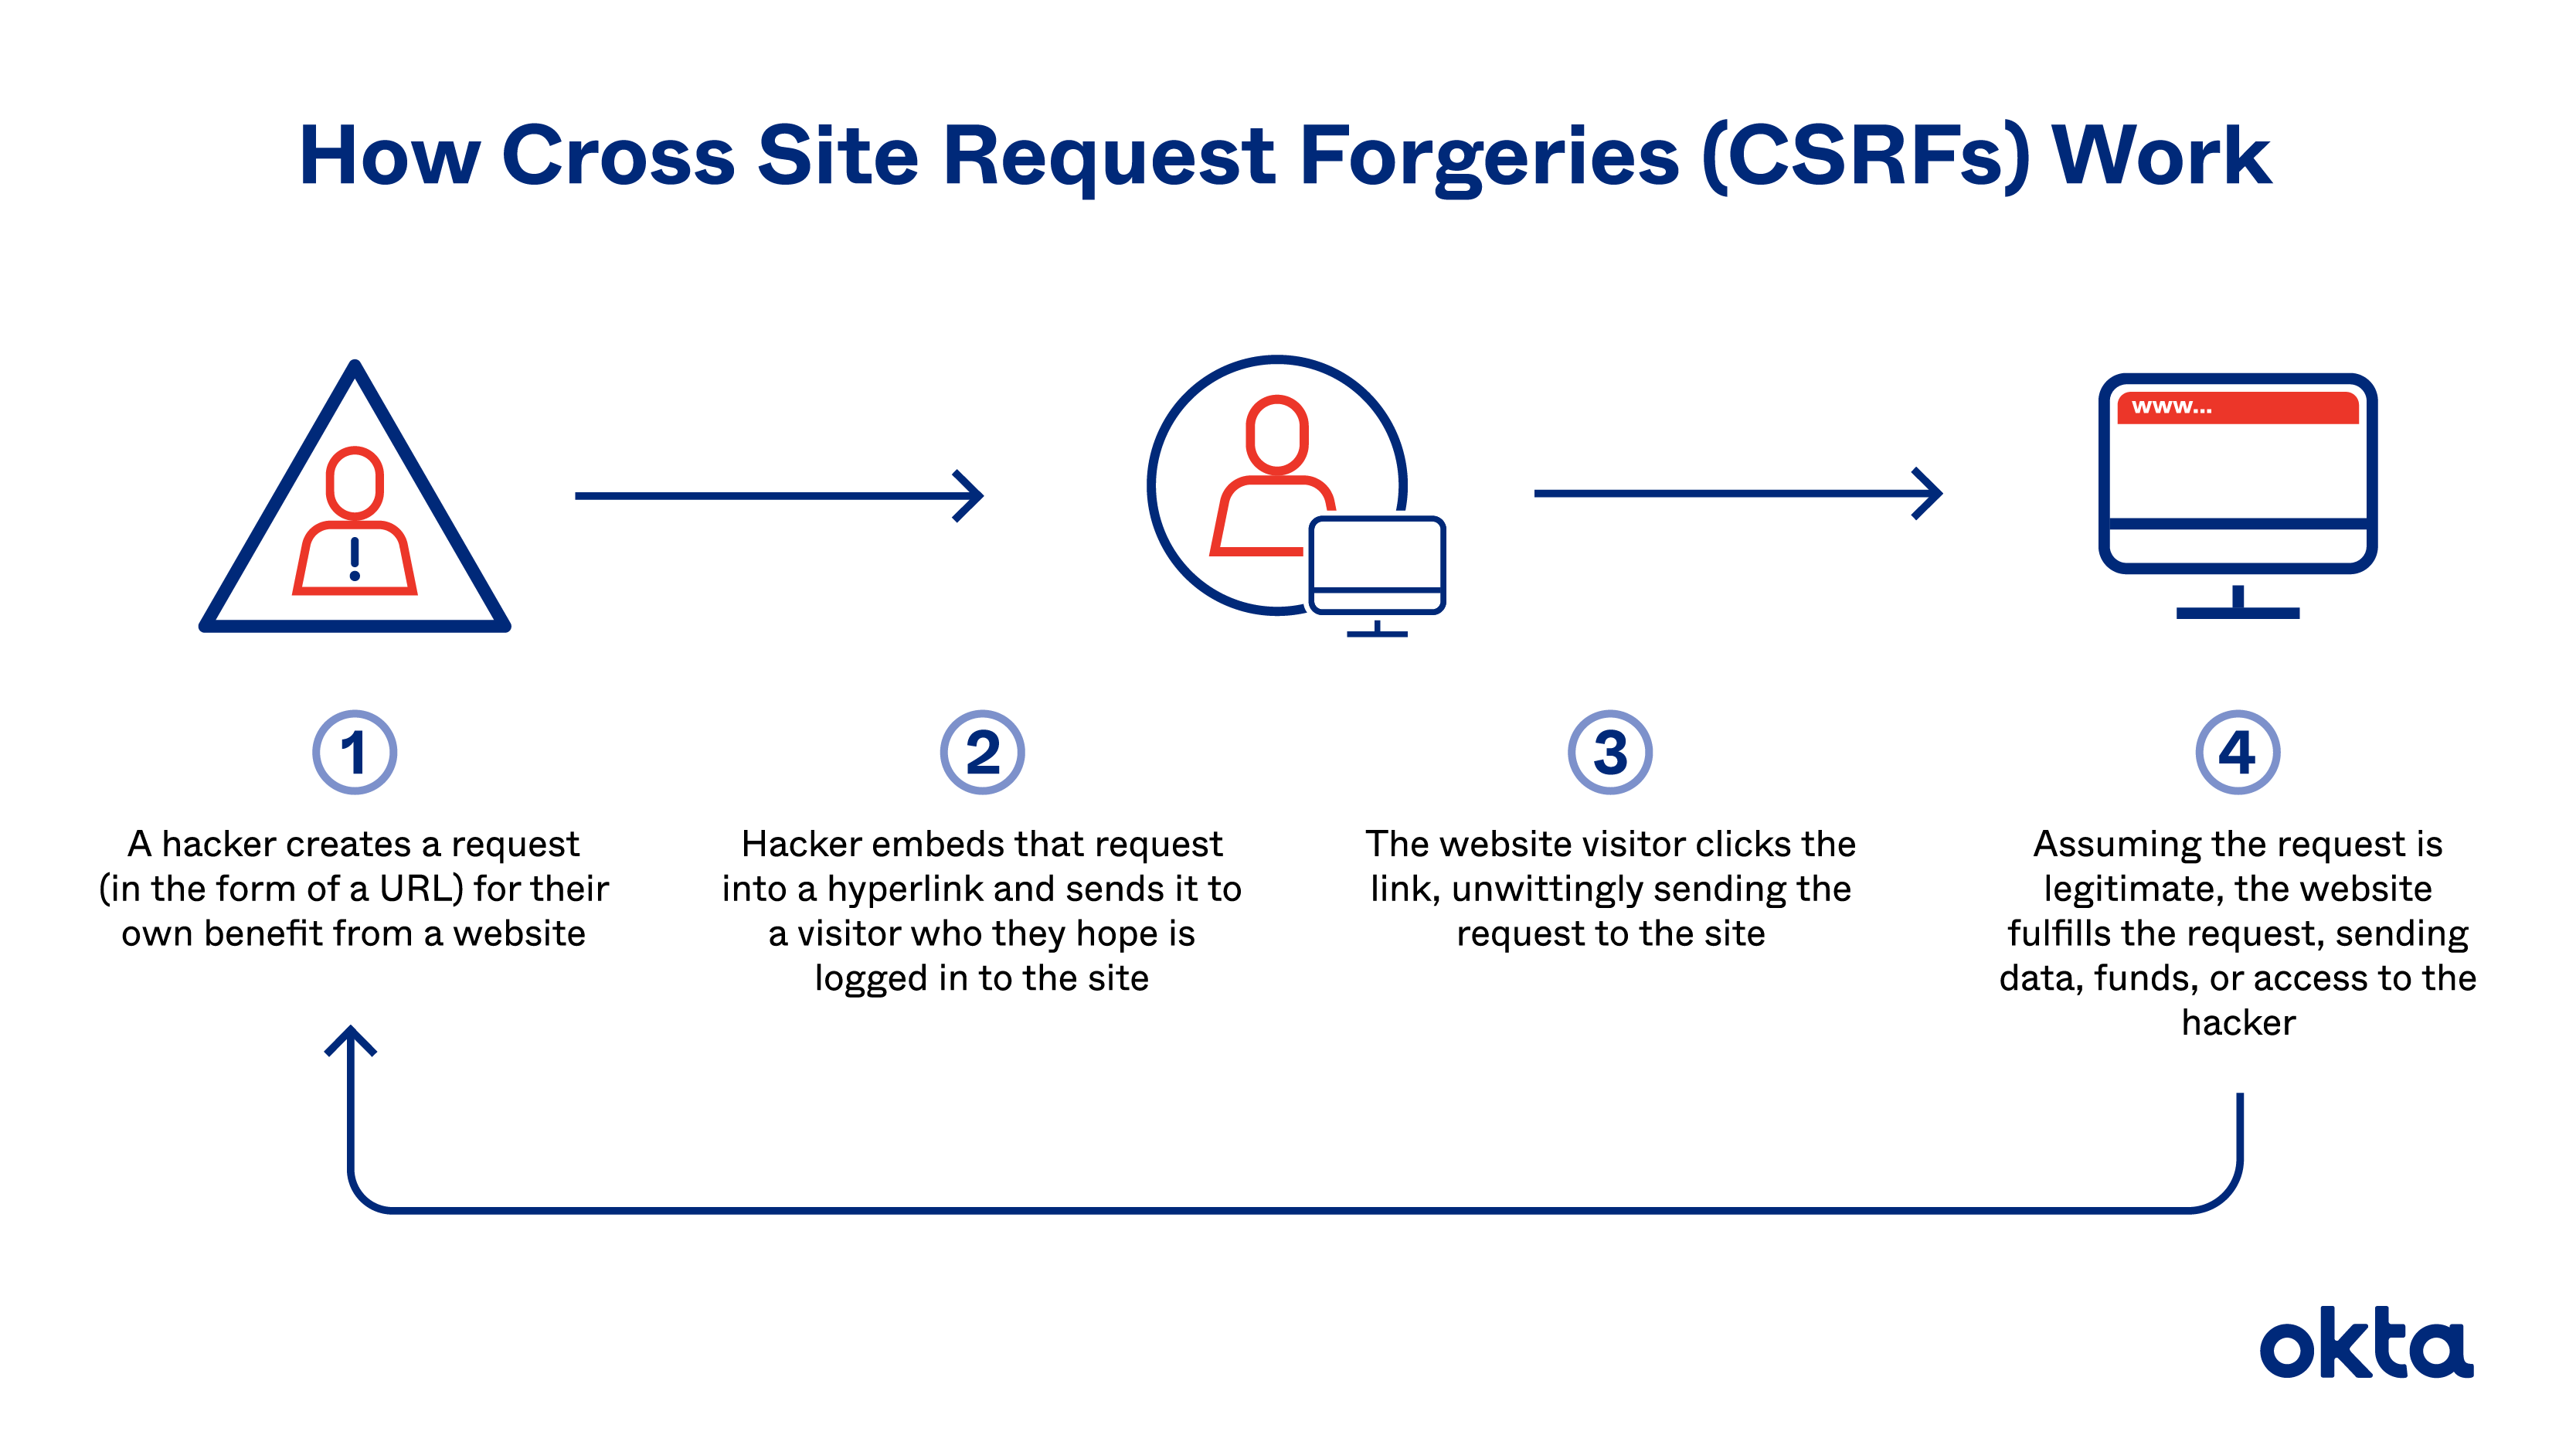 How Do CSRF Attacks Work?